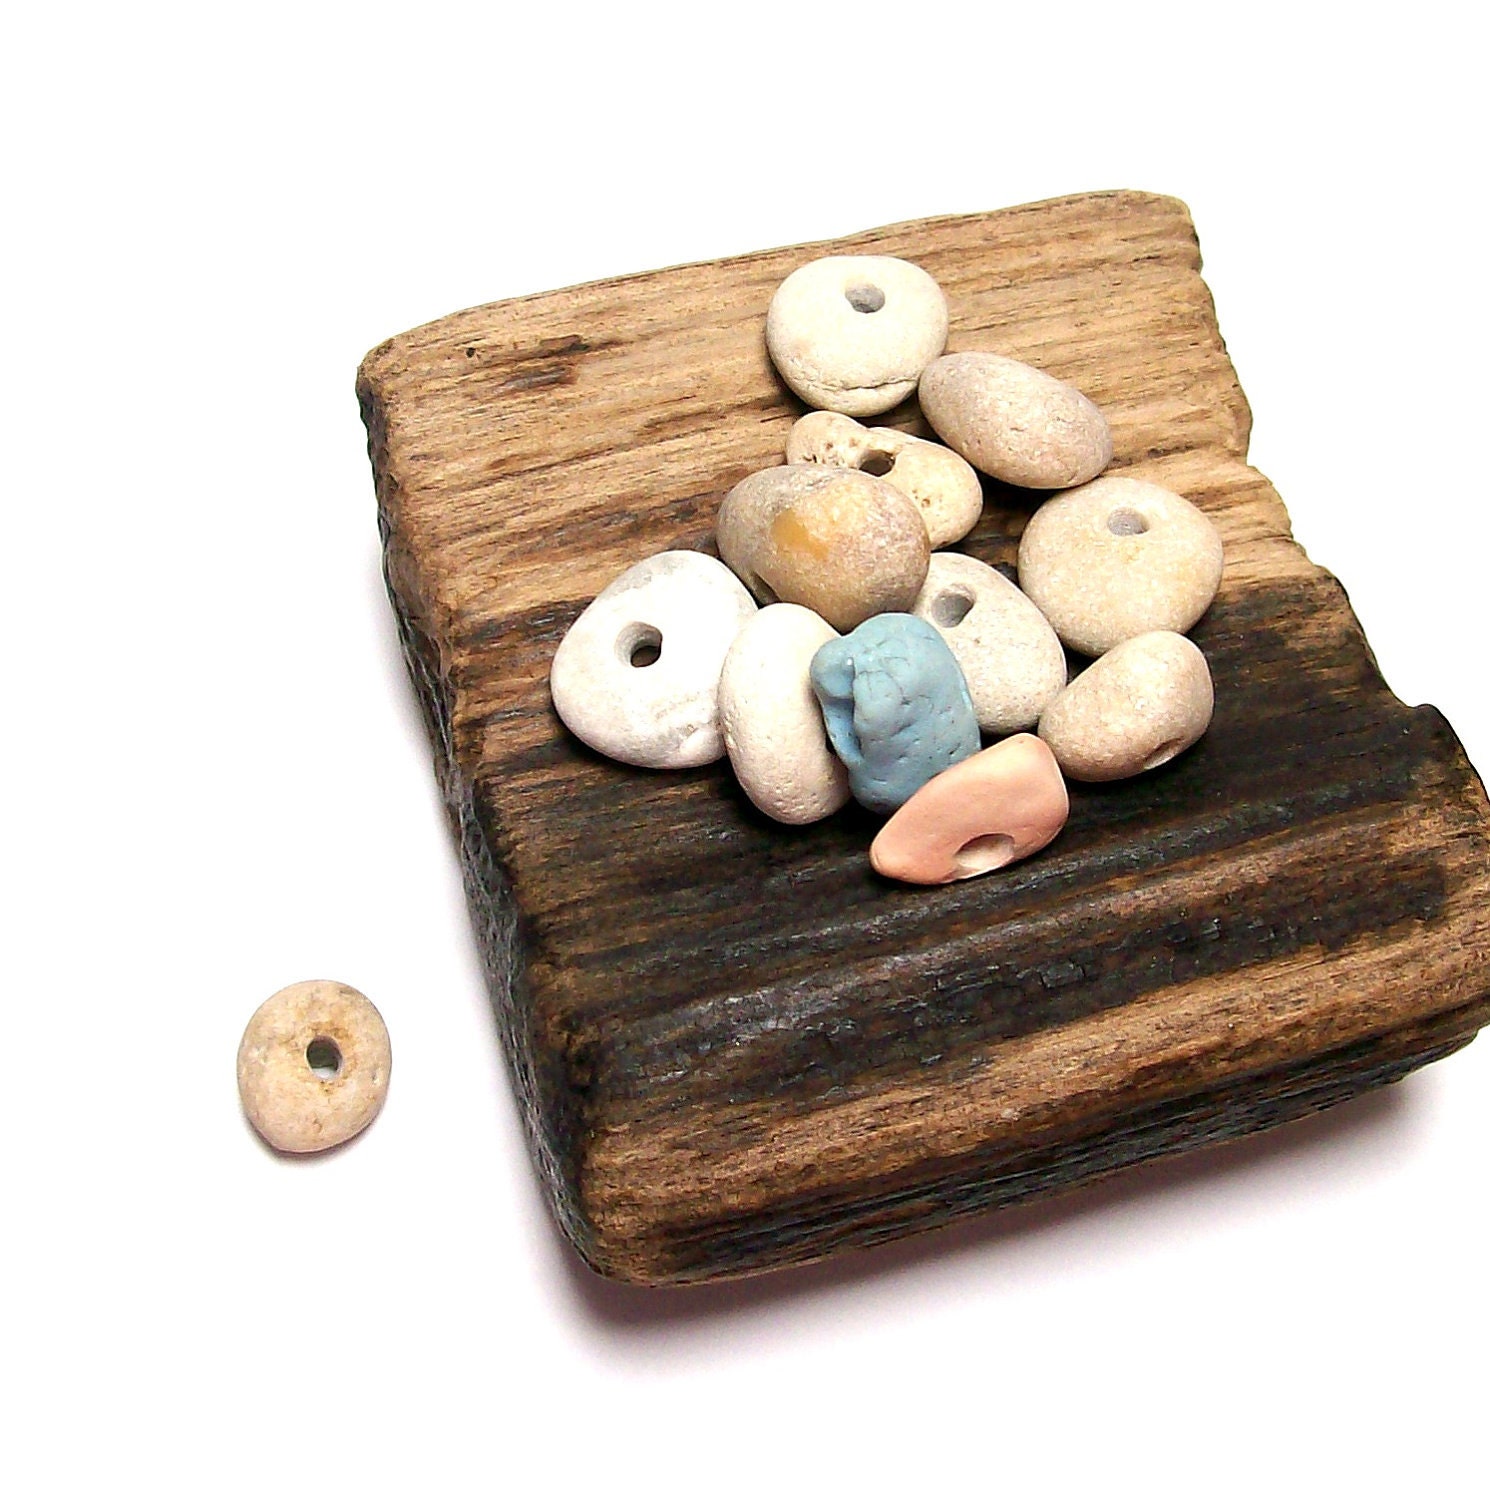 Pebble Beach Stones - Slag Sea Glass - jewelry making Rondelles - "Nursery Time"